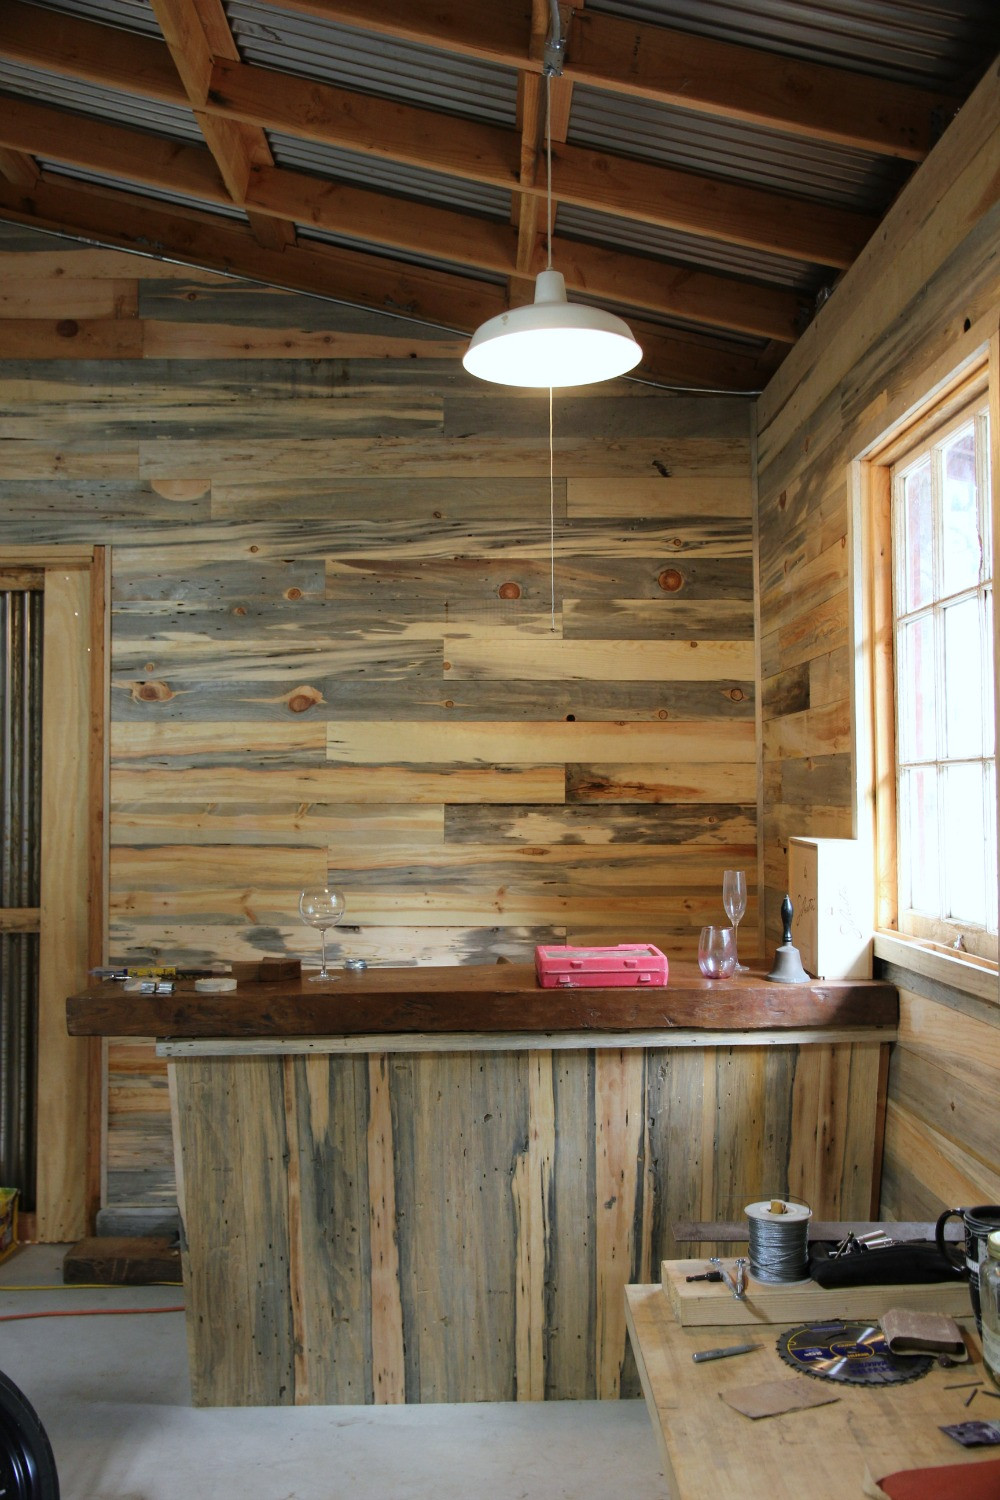 DIY Wood Plank Wall
 DIY Pipe Shelf & Reclaimed Wood Plank Walls